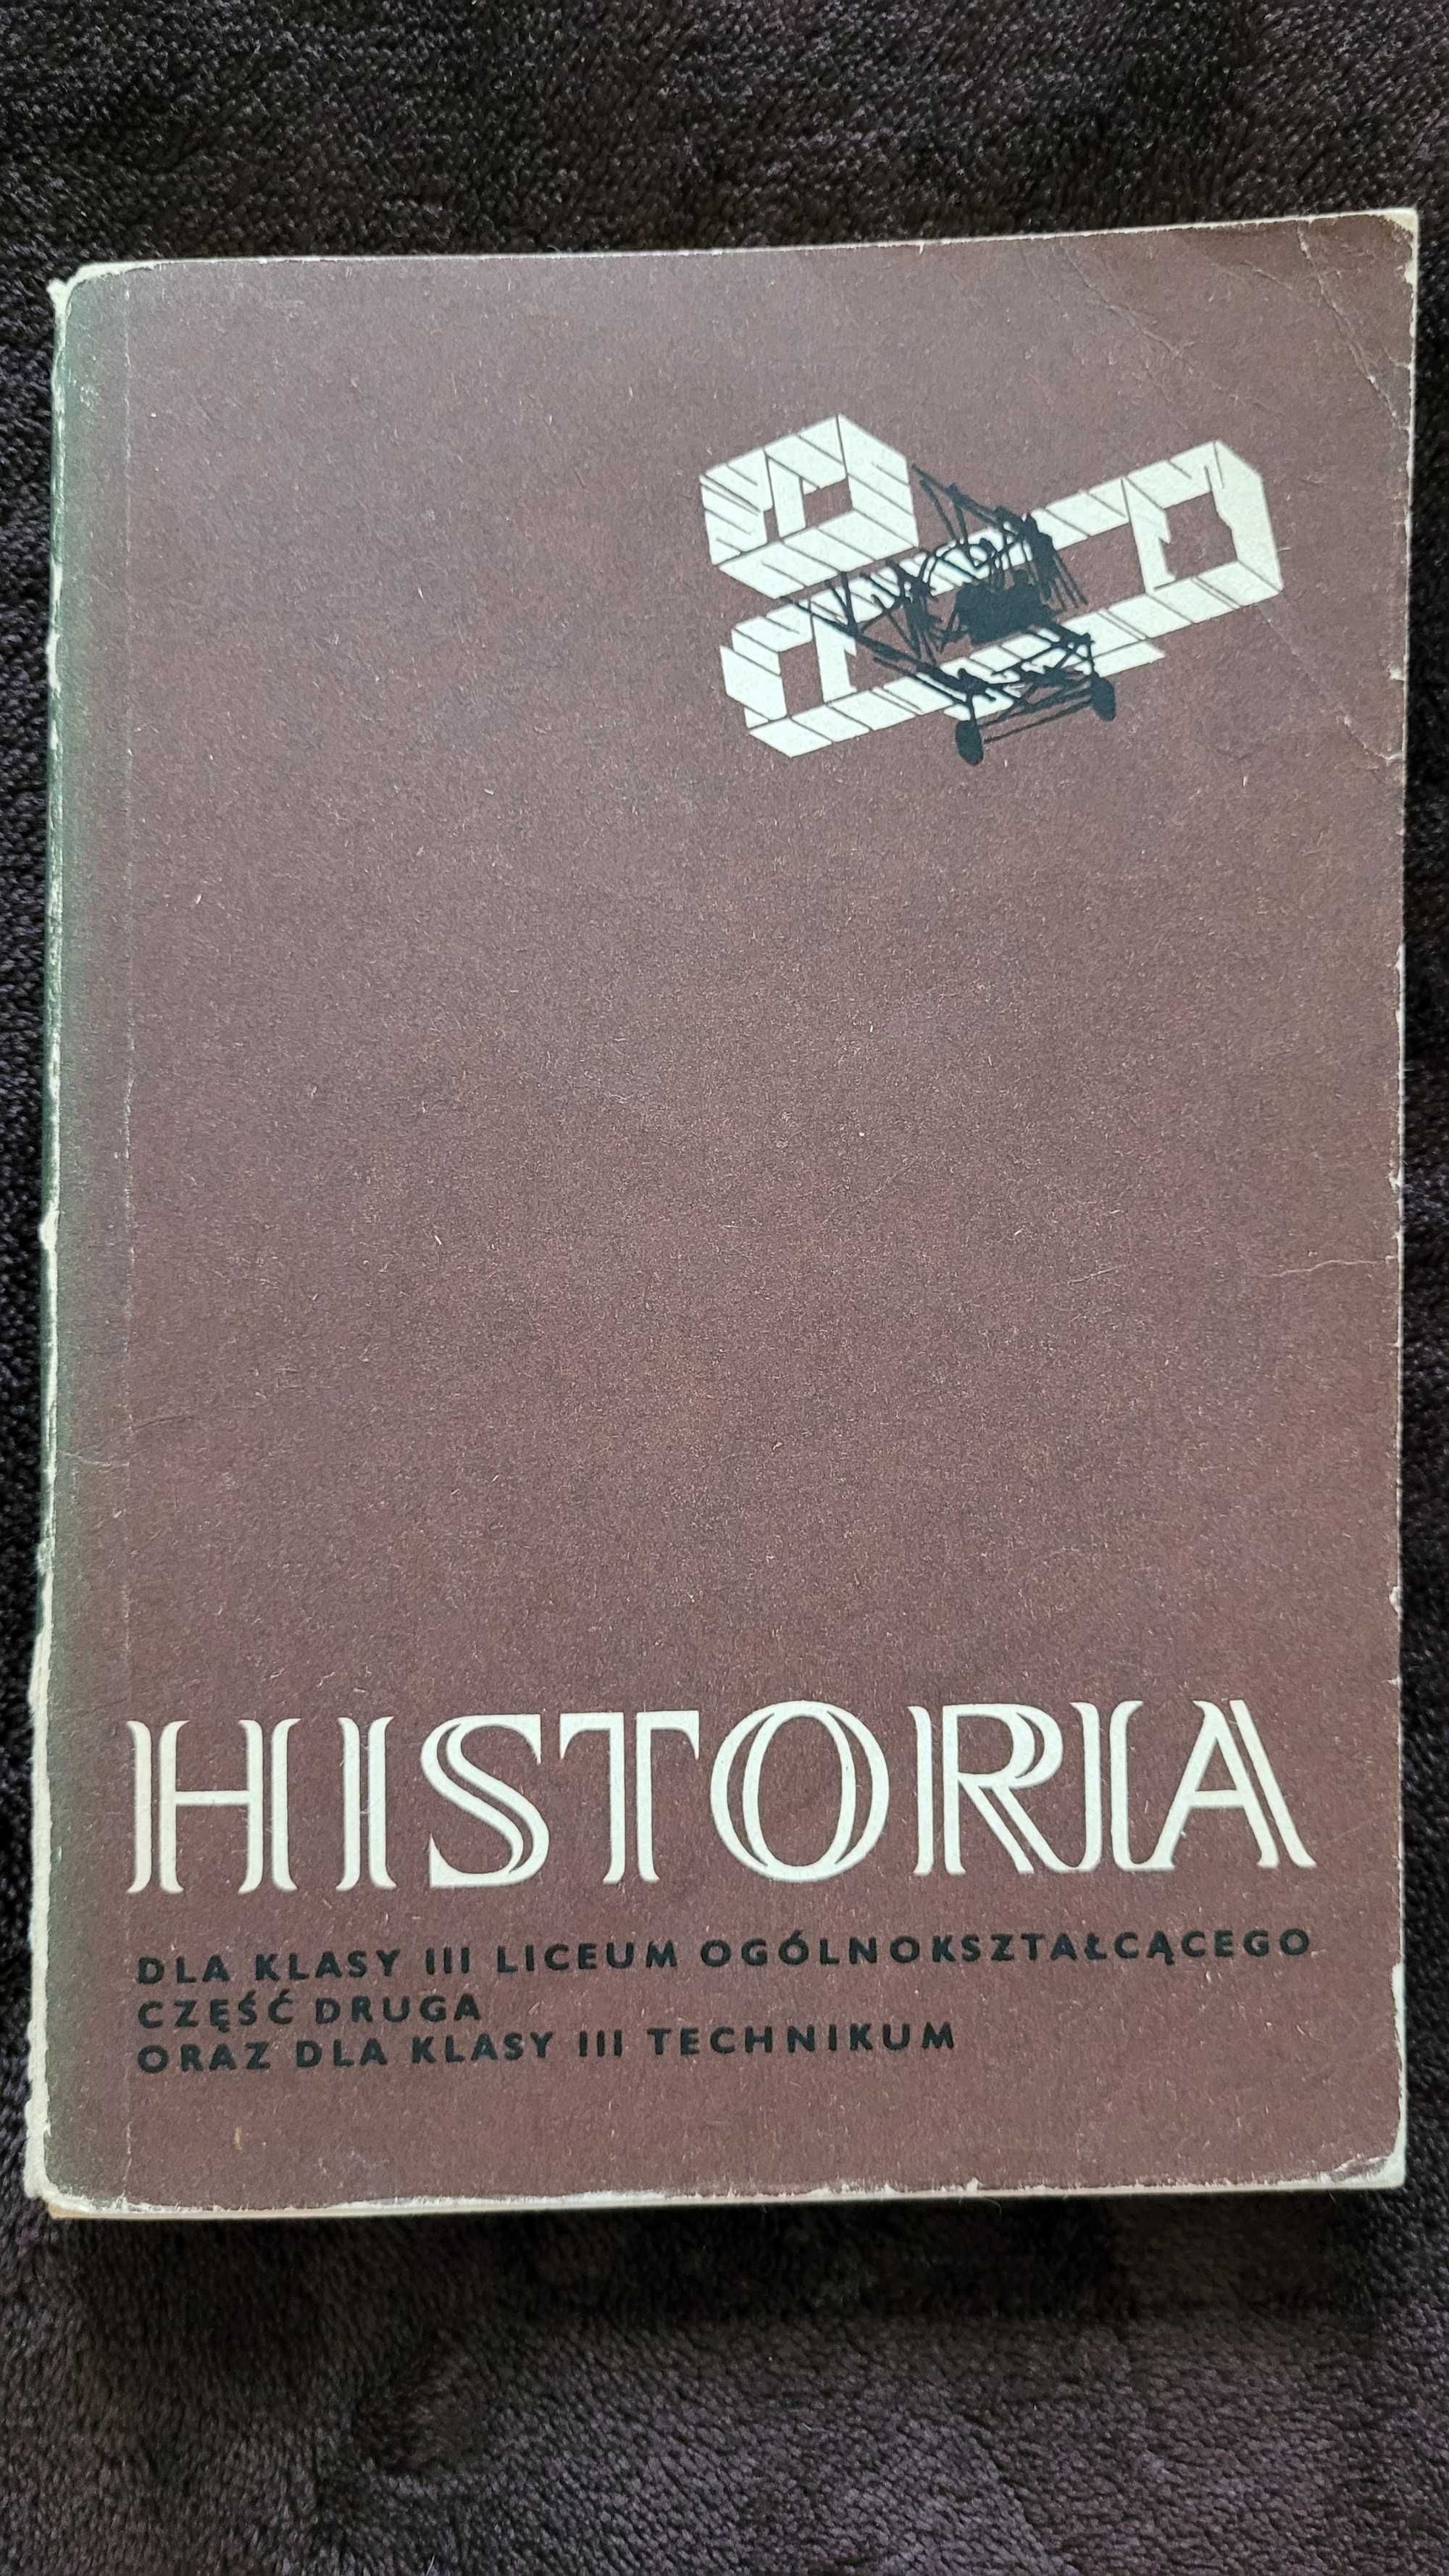 Historia, Roman Wapiński